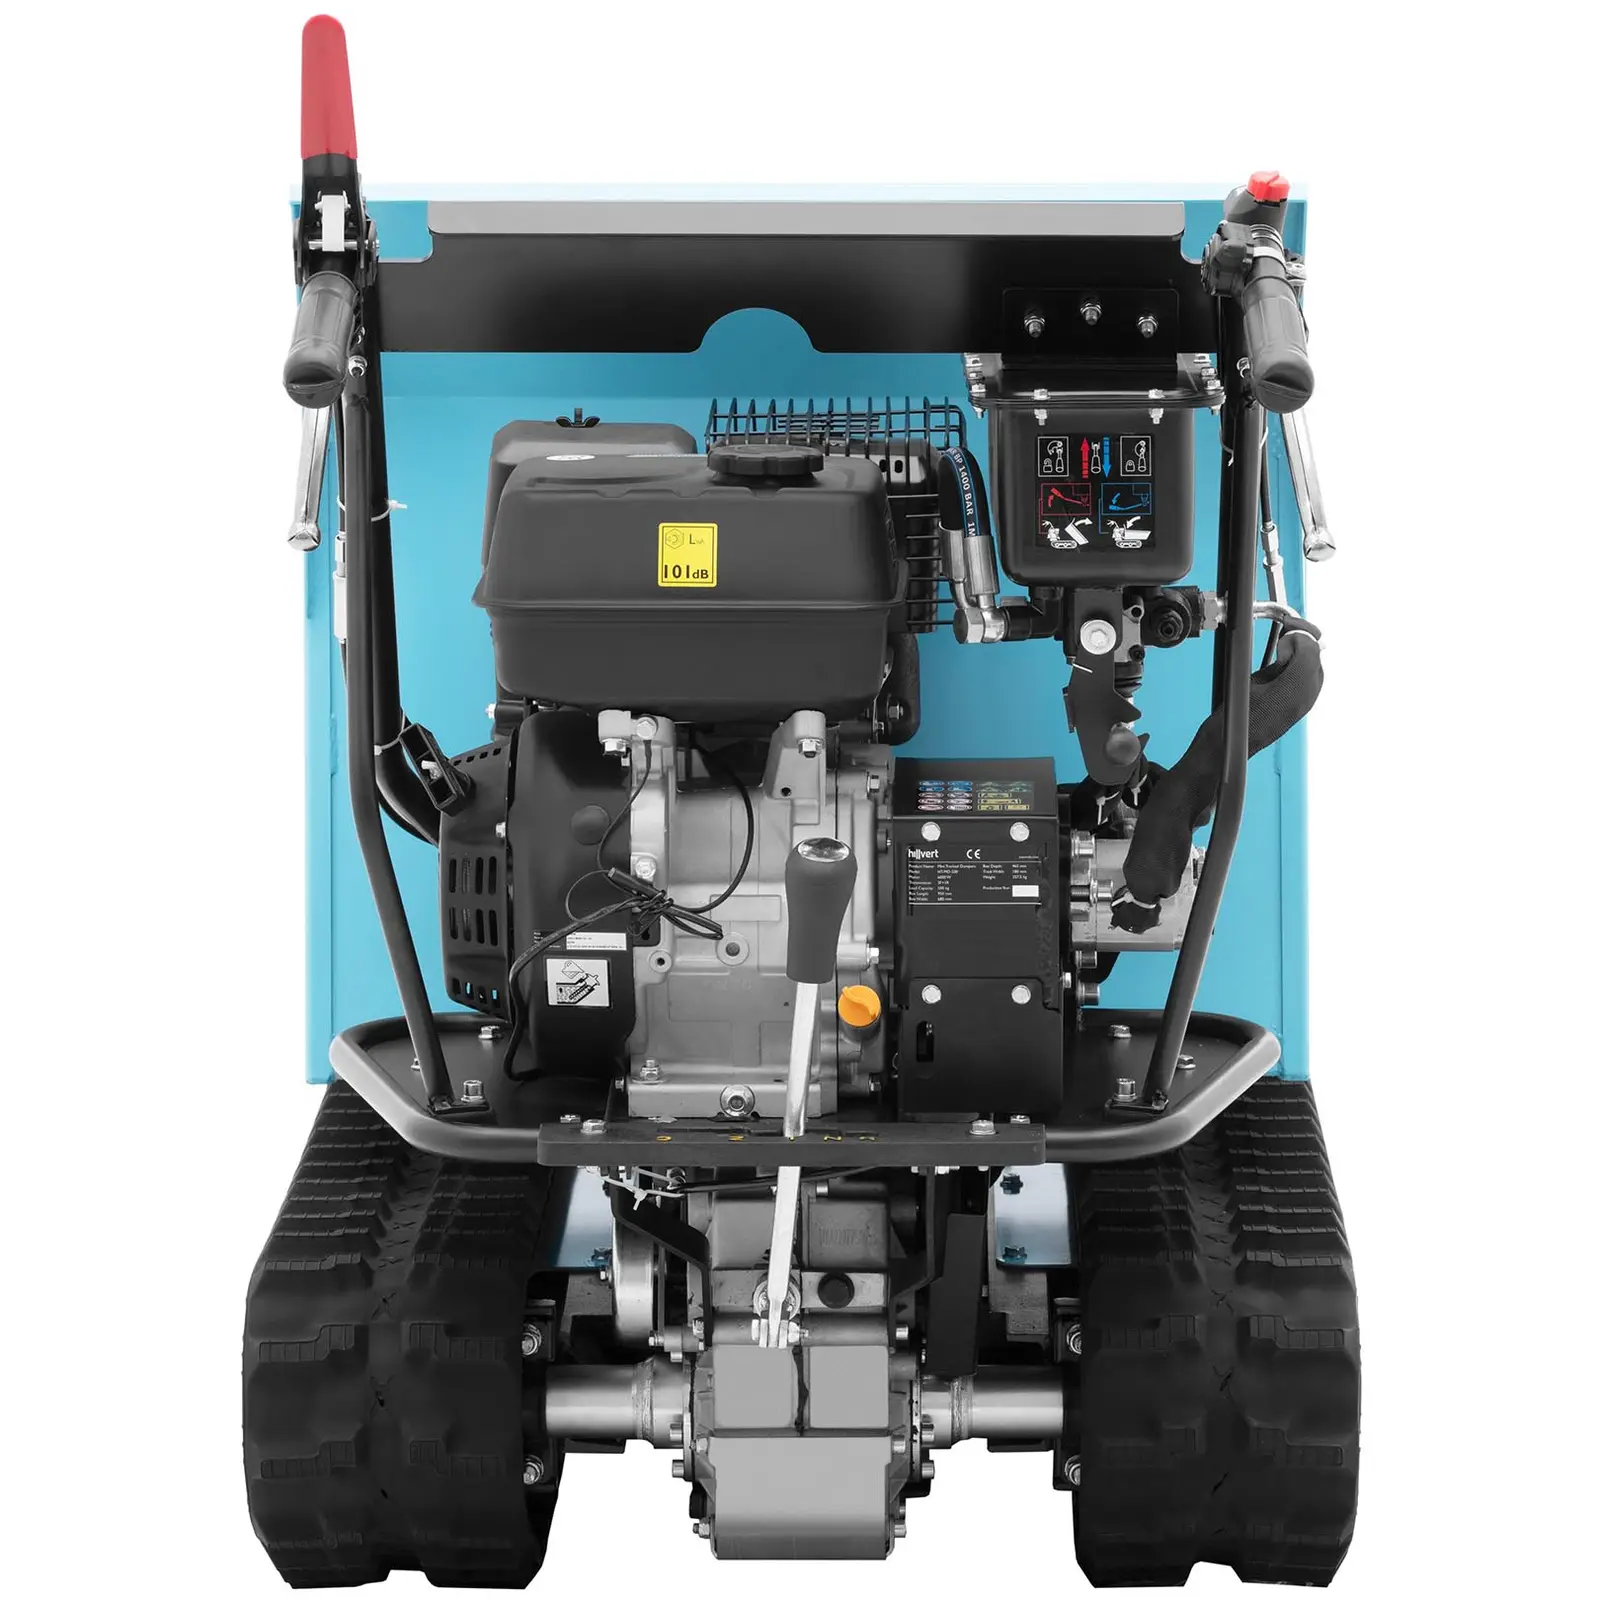 Motorschubkarre / Dumper - auf Raupen - bis 500 kg - 6 kW-Benzinmotor